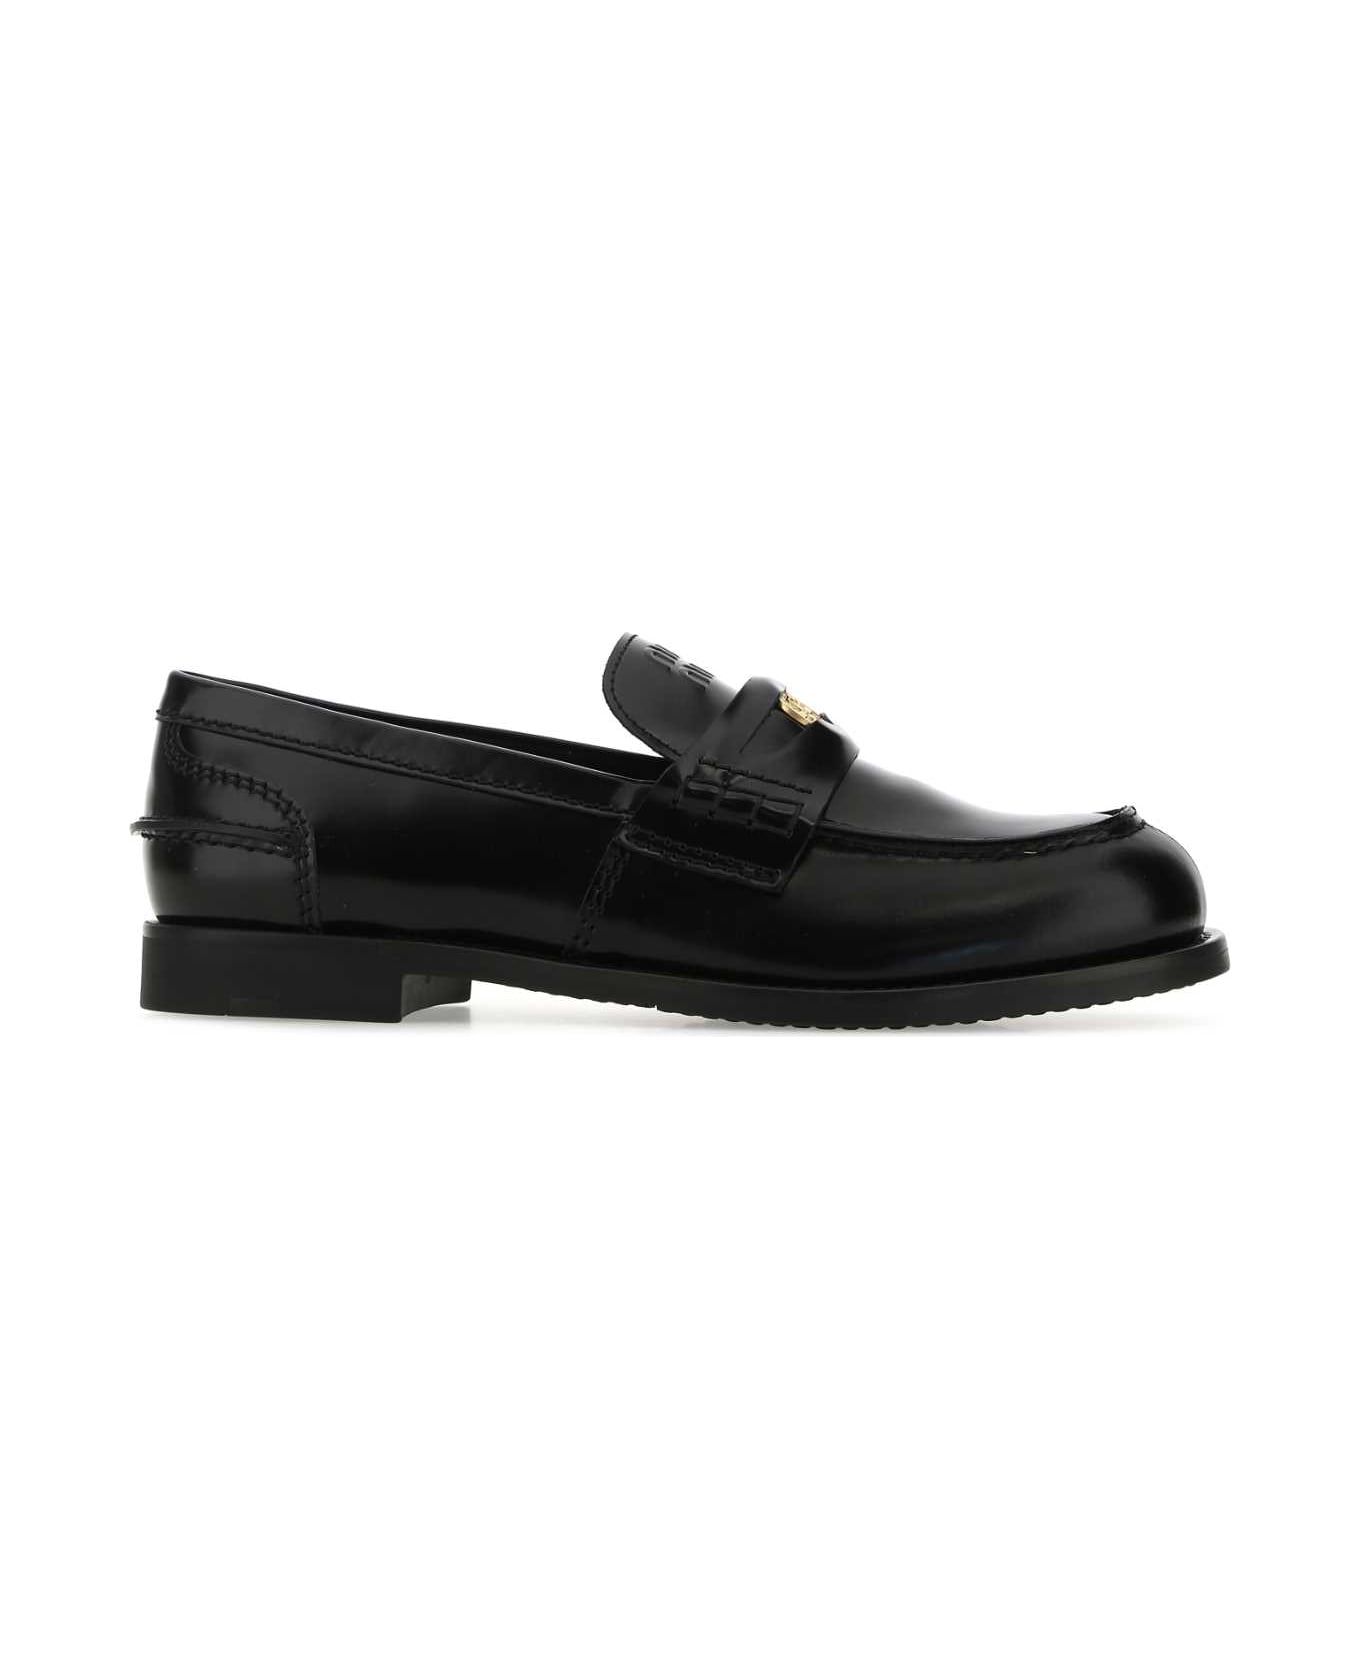 Miu Miu Black Leather Loafers - F0002